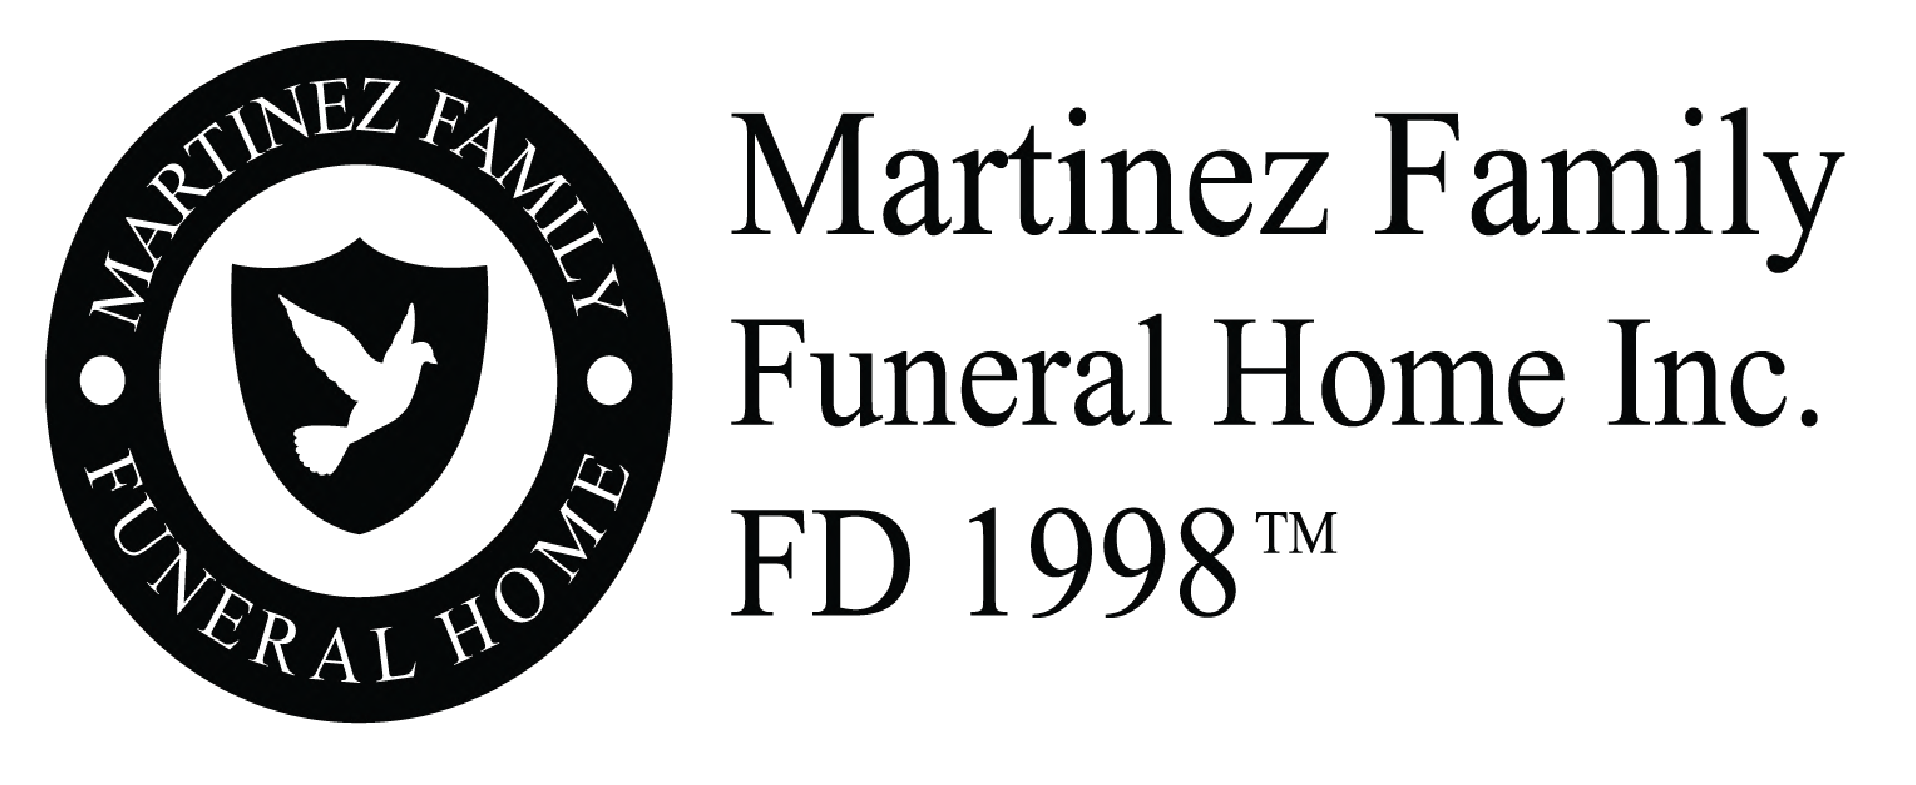 Martinez family funeral home inc logo in black